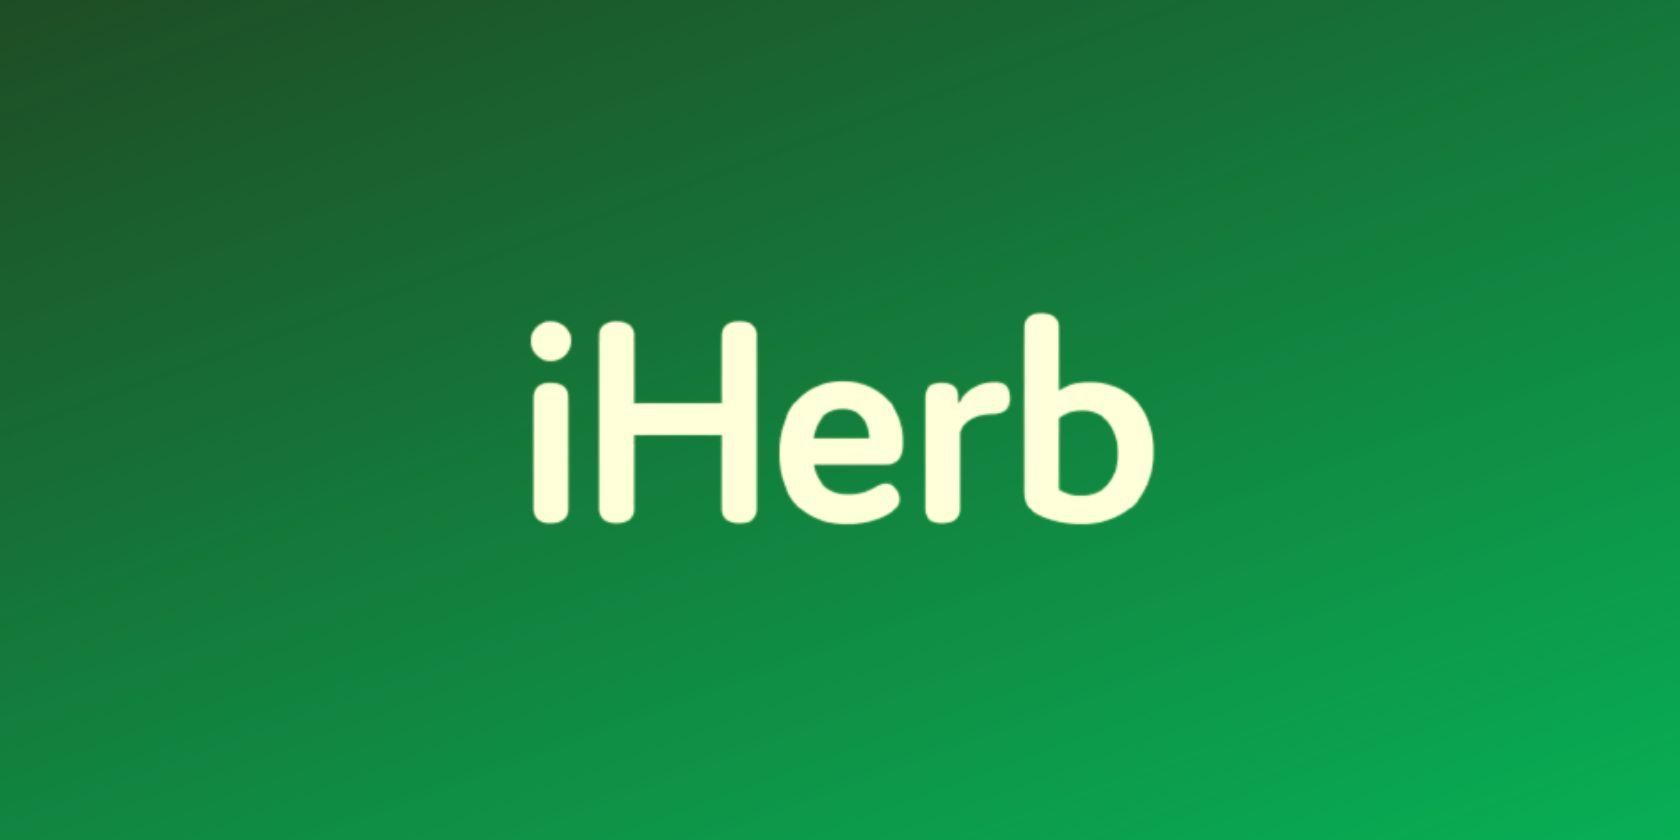 iHerb logo seen on green background